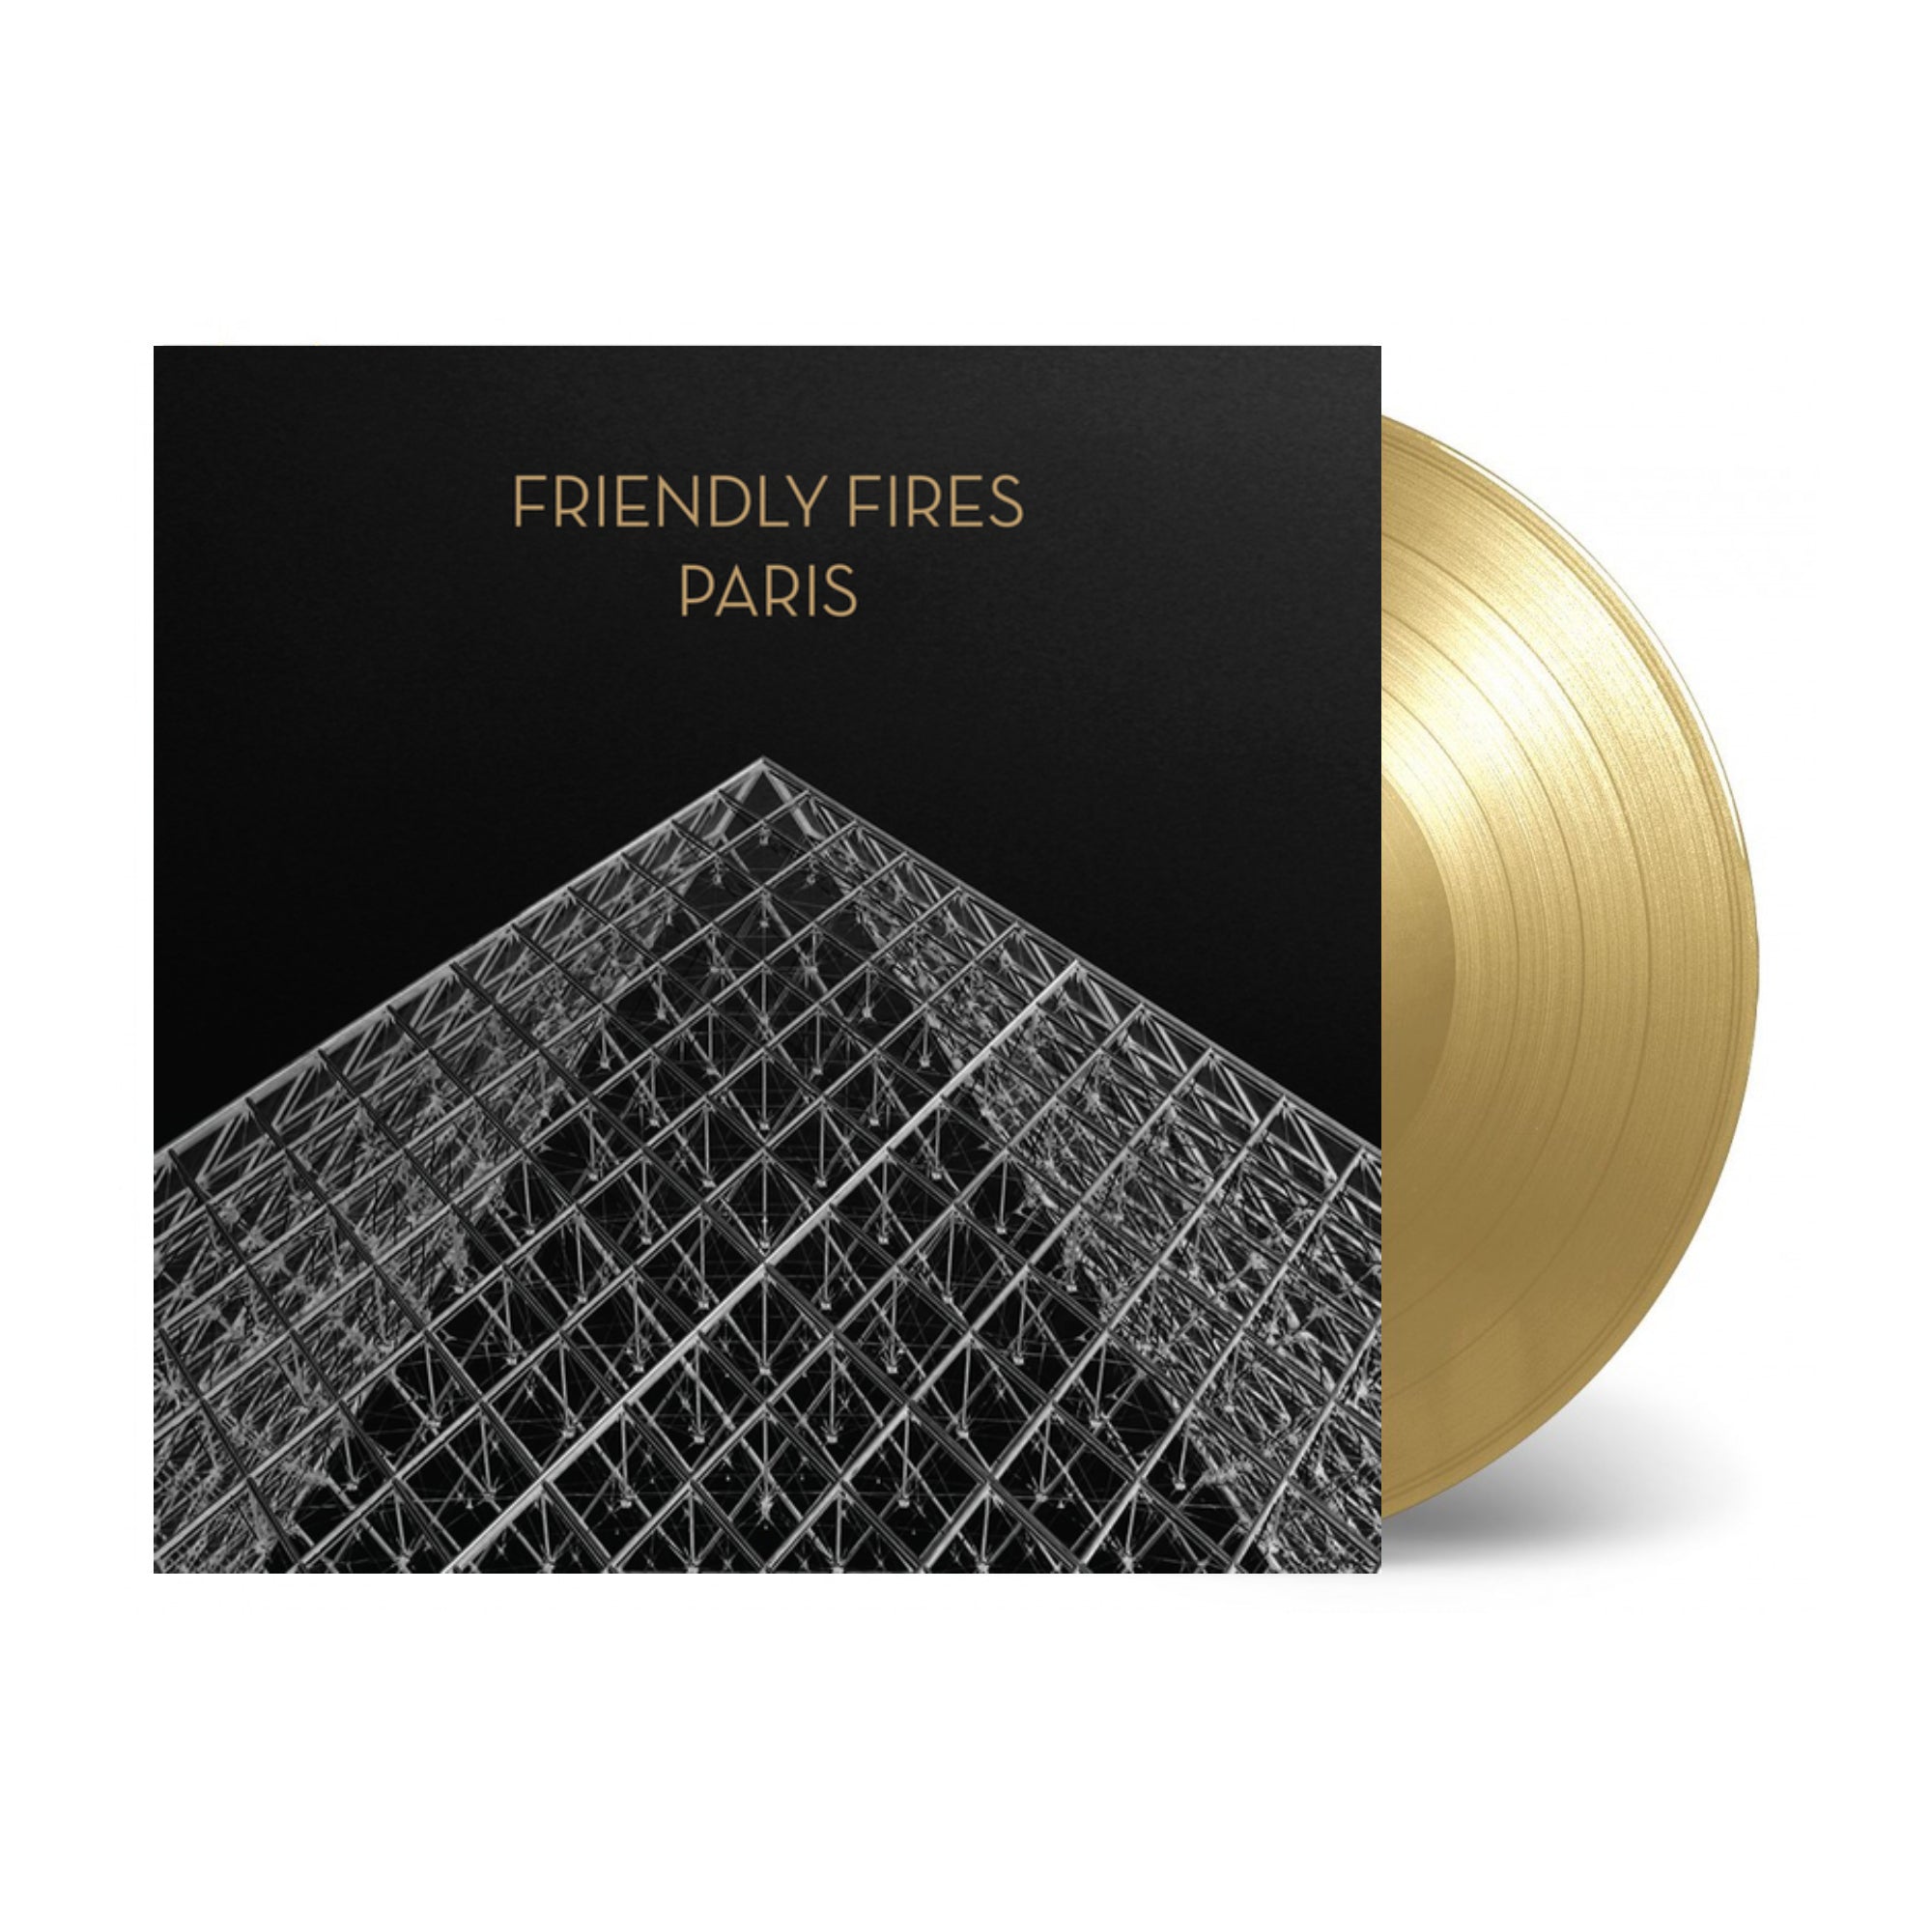 Paris - 15th Anniversary Edition Limited Gold Vinyl 12" Single